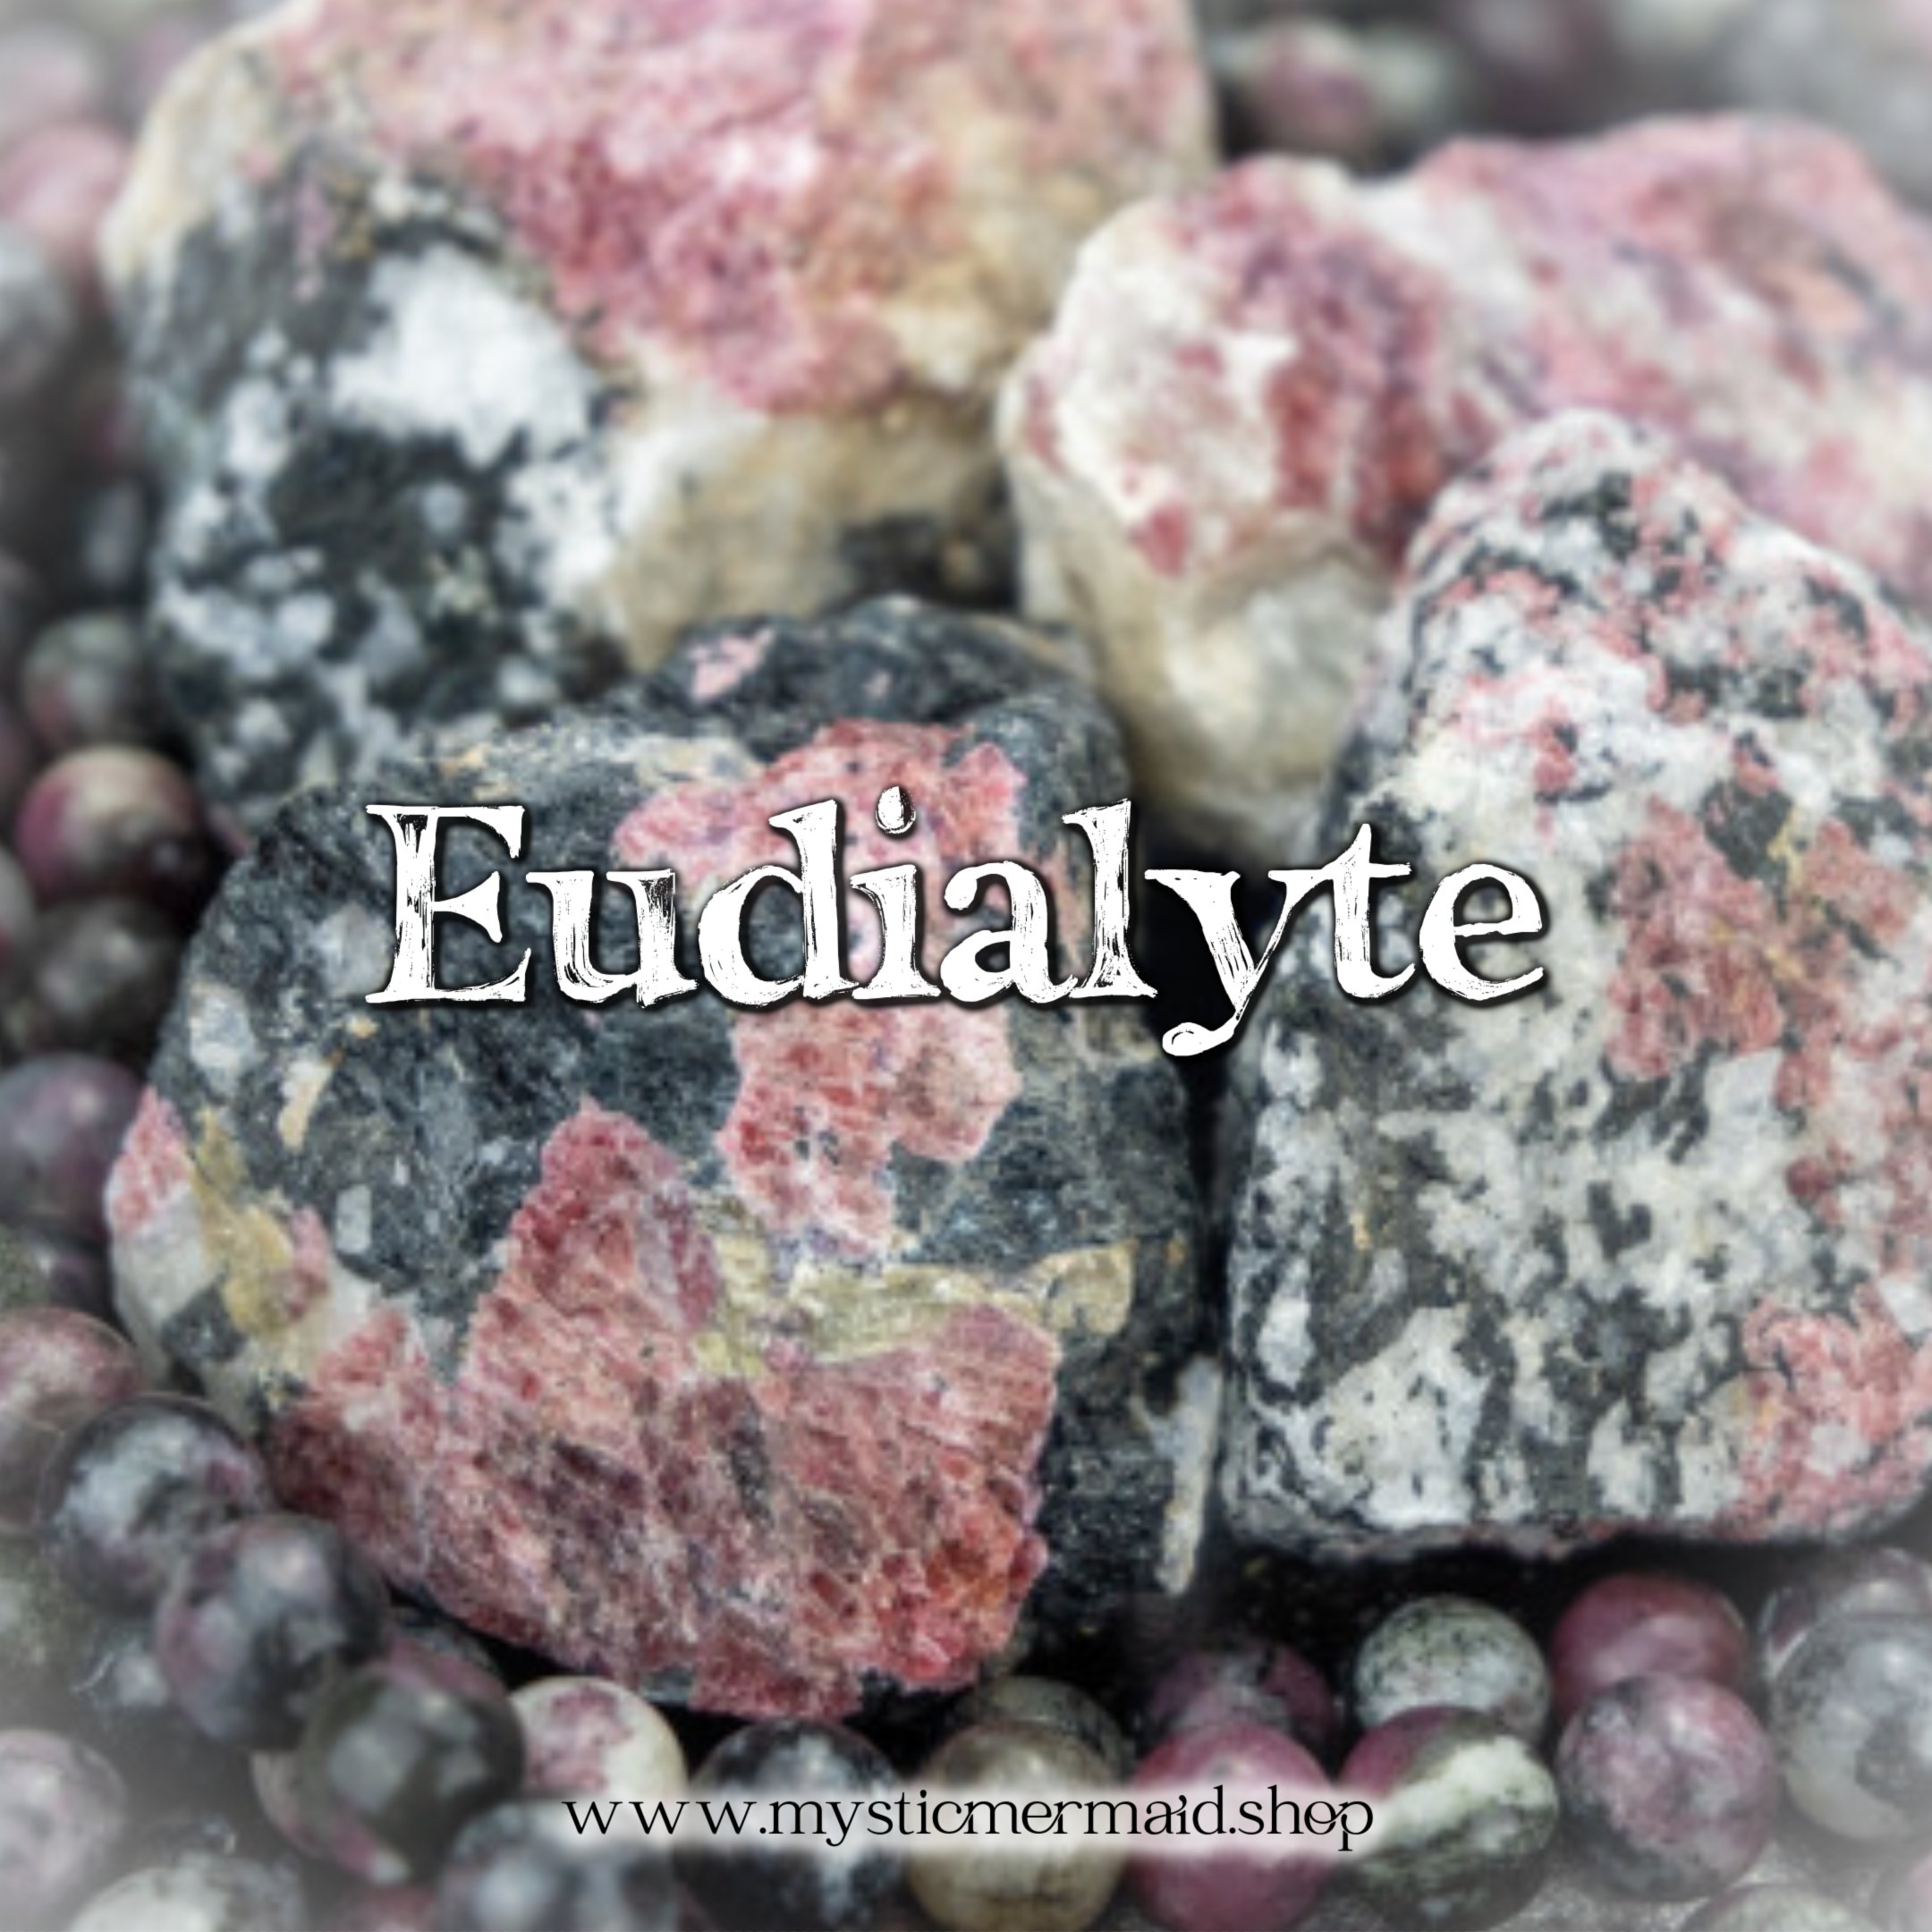 Eudialyte